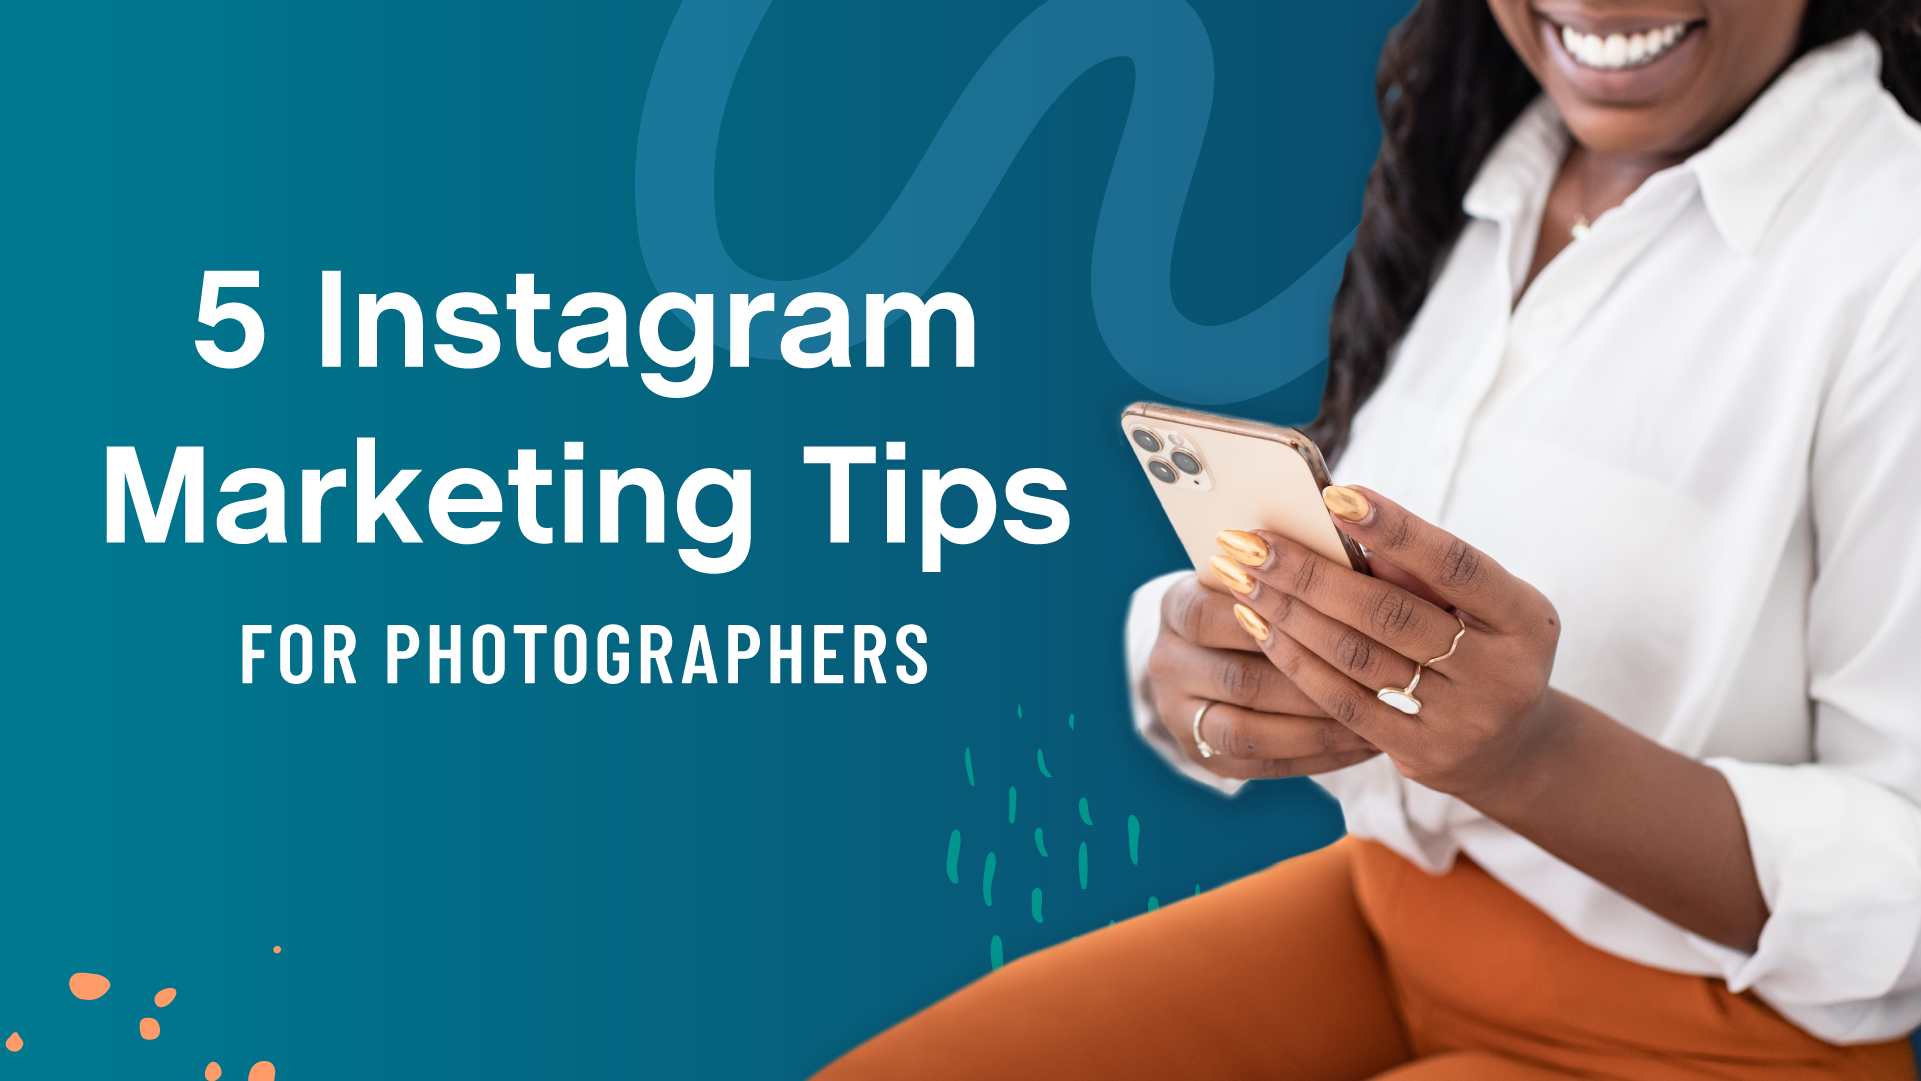 5 Instagram Marketing Tips for Photographers